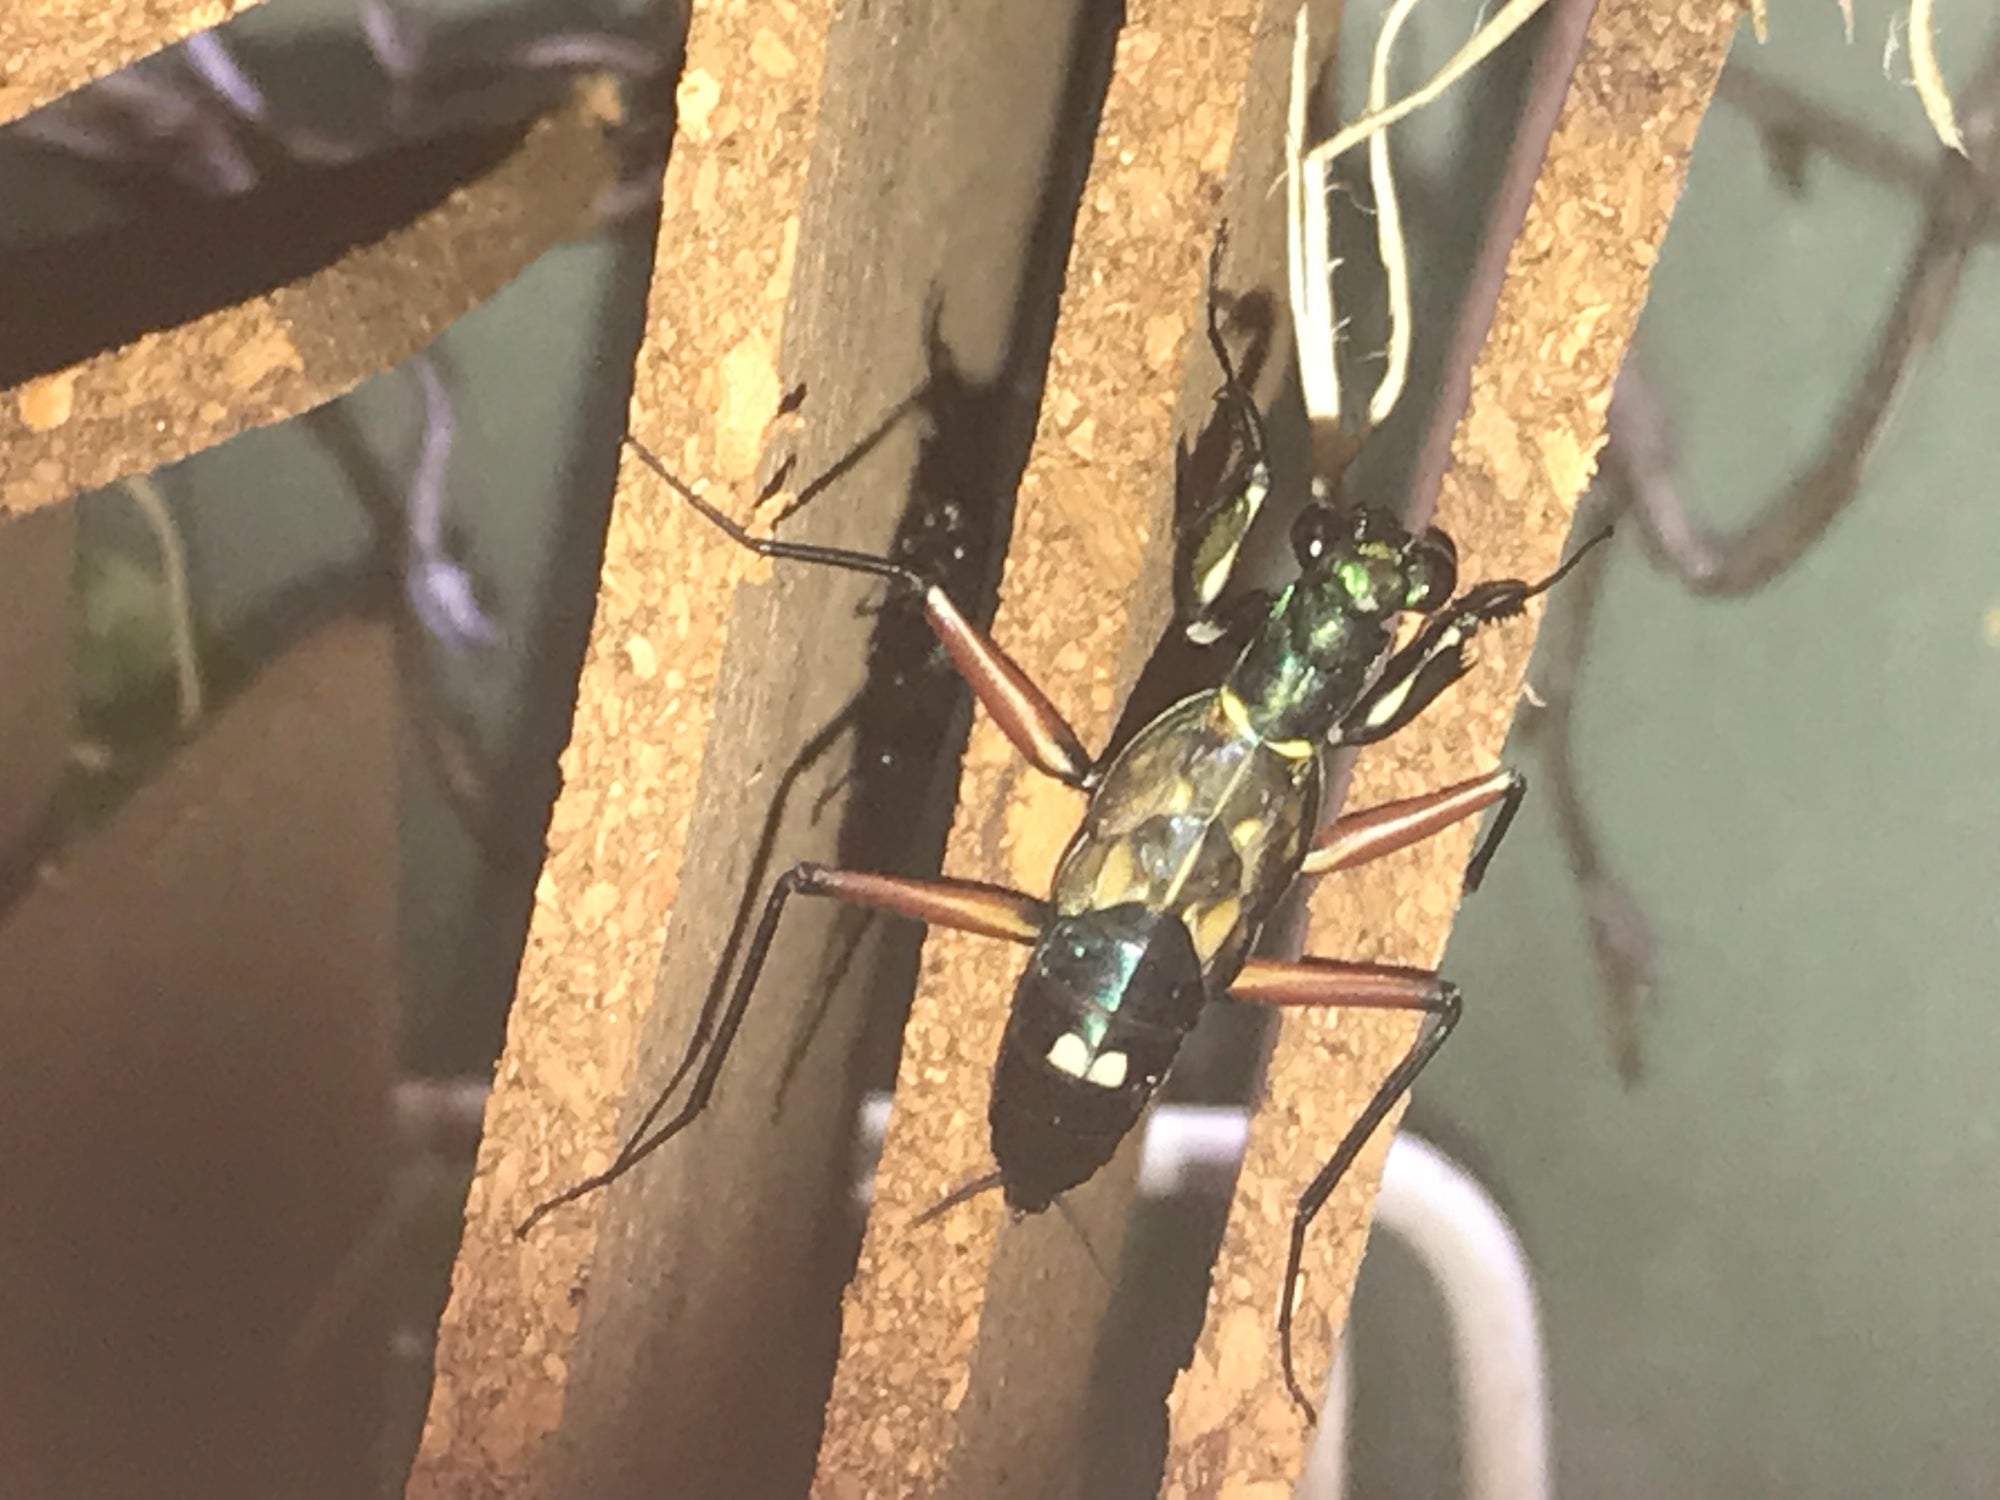 Metallyticus splendidus. Iridescent bark mantis, Live Insects - USMantis.com